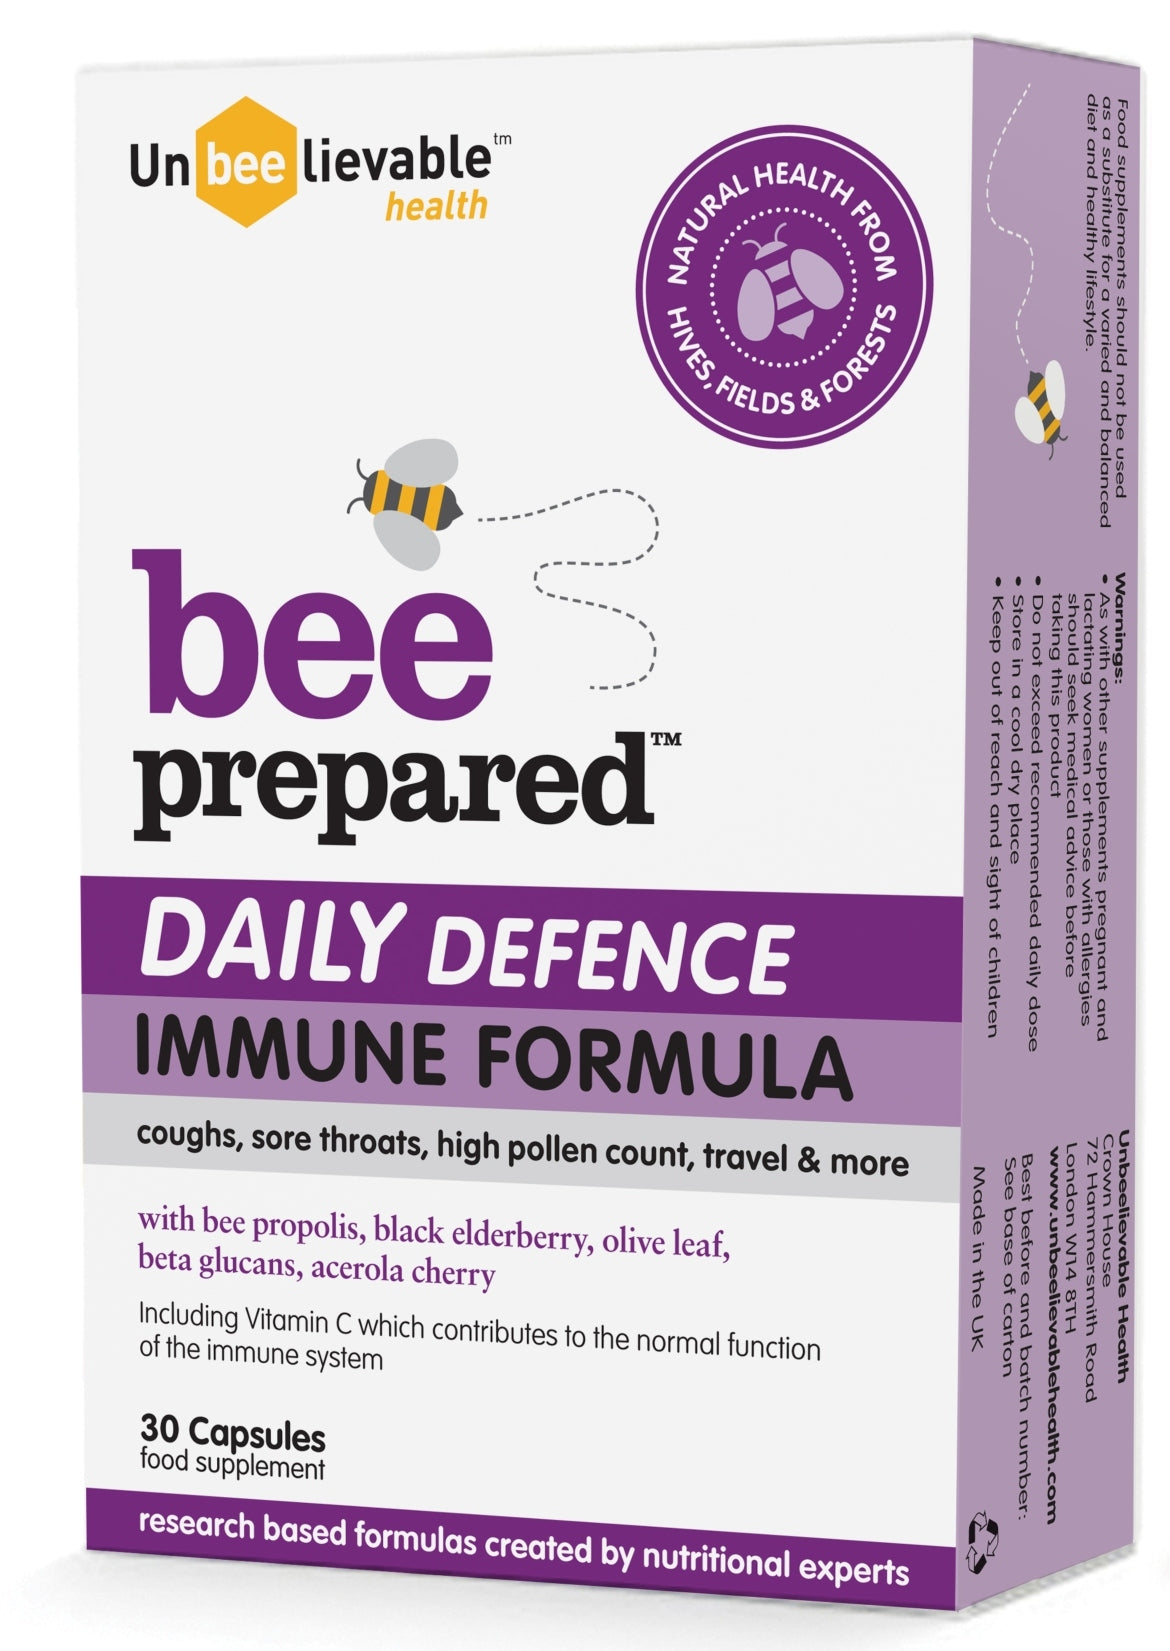 Unbeelievable bee prepared DAILY Defence Immune Formula 30's